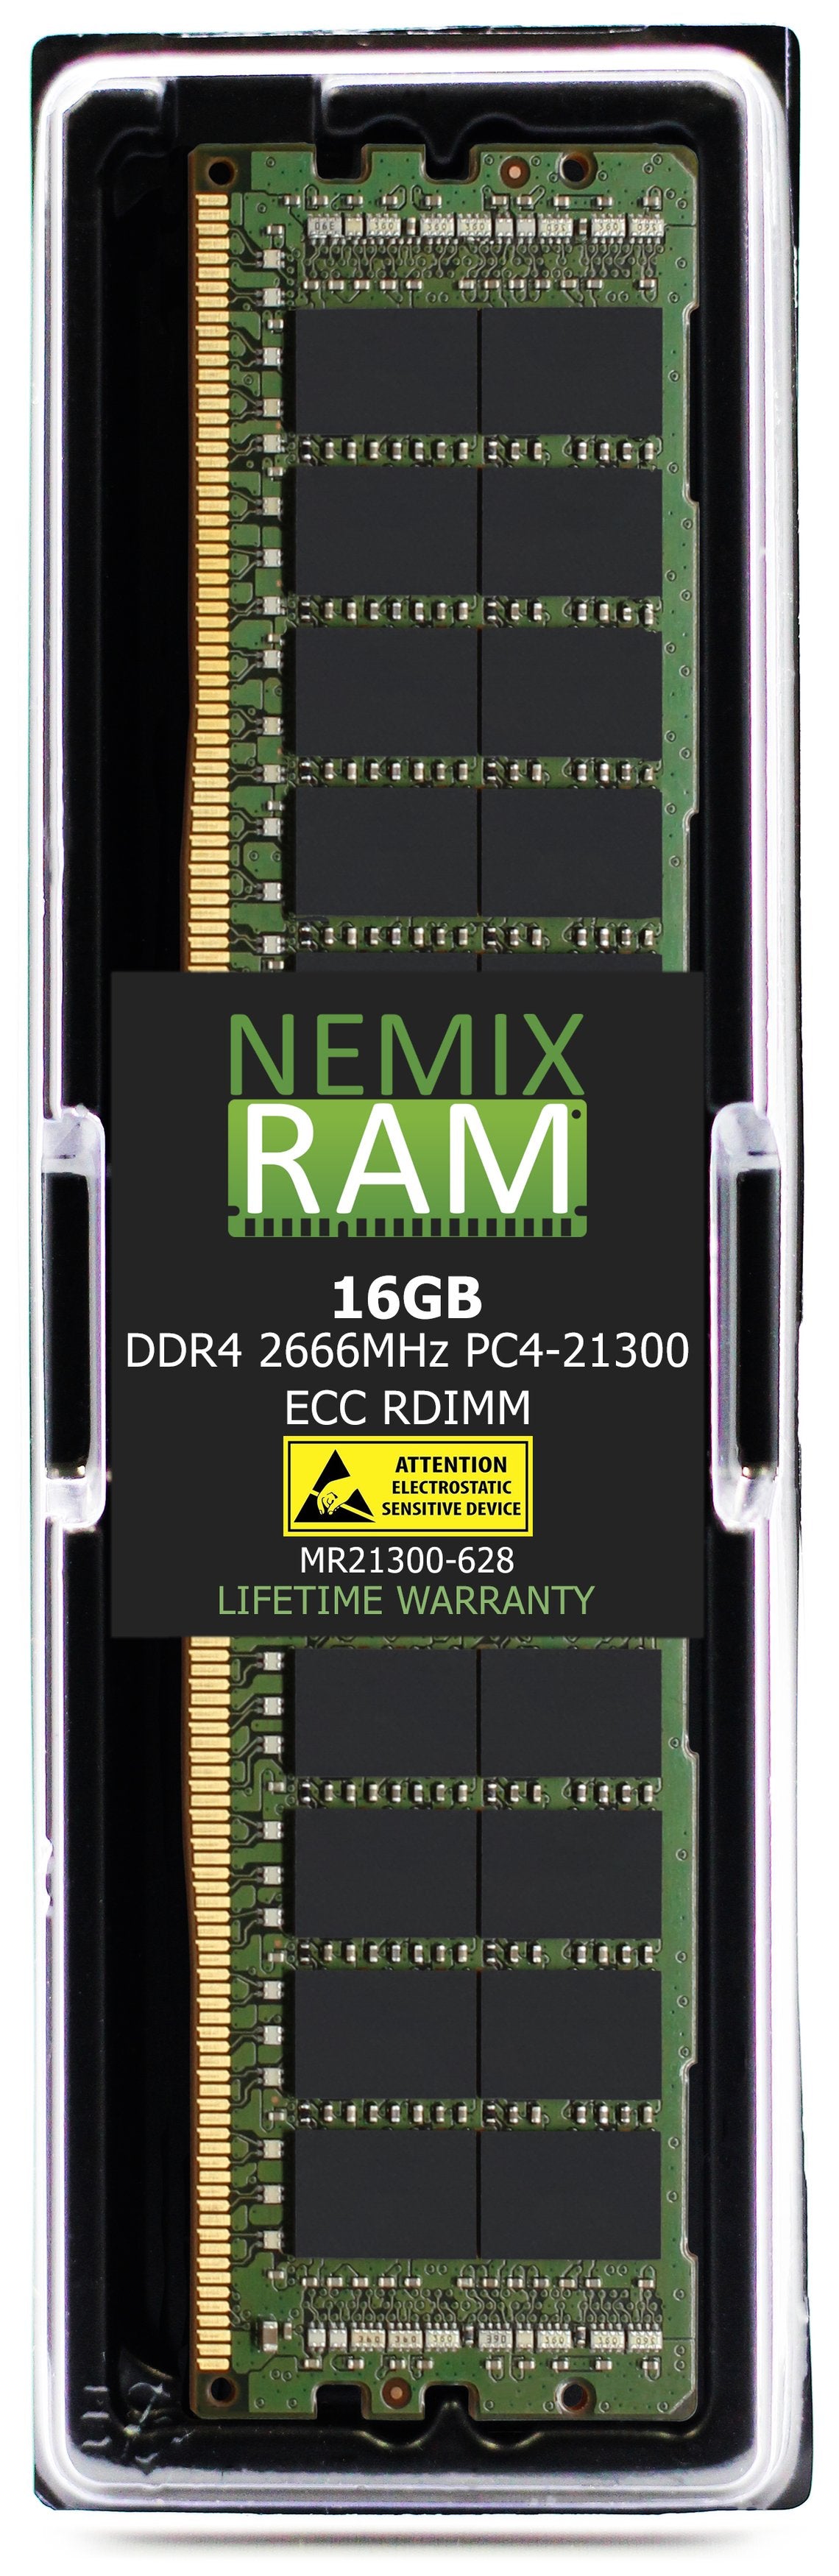 16GB DDR4 2666MHZ PC4-21300 RDIMM Compatible with Supermicro MEM-DR416L-HL03-ER26